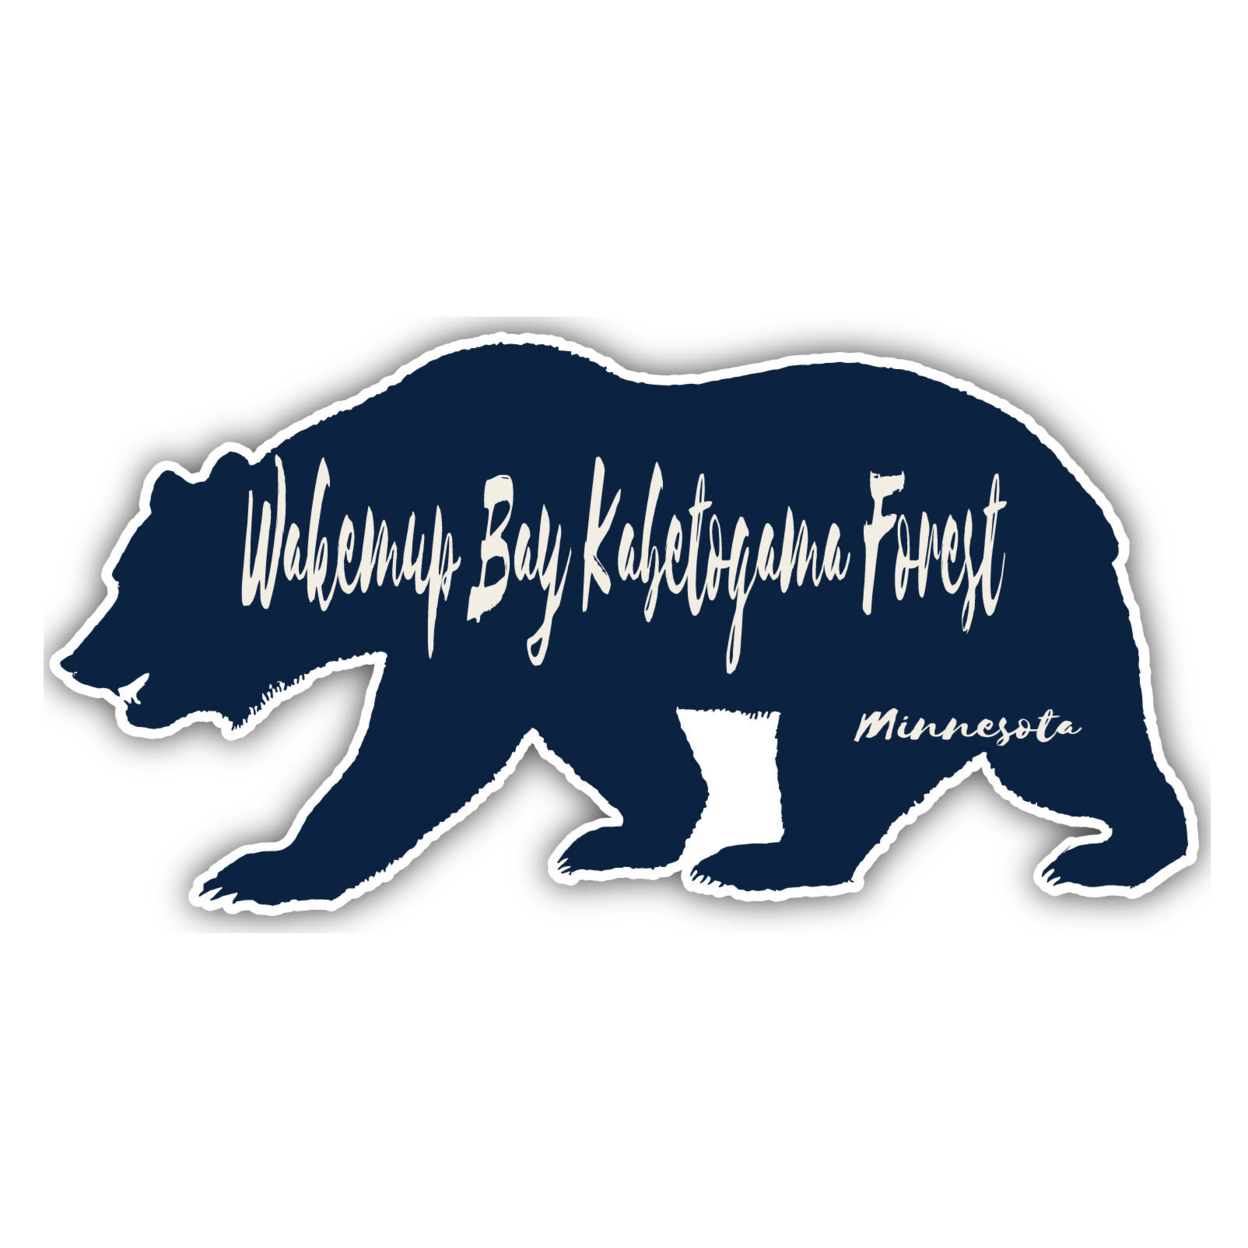 Wakemup Bay Kabetogama Forest Minnesota Souvenir Decorative Stickers (Choose Theme And Size) - Single Unit, 2-Inch, Bear